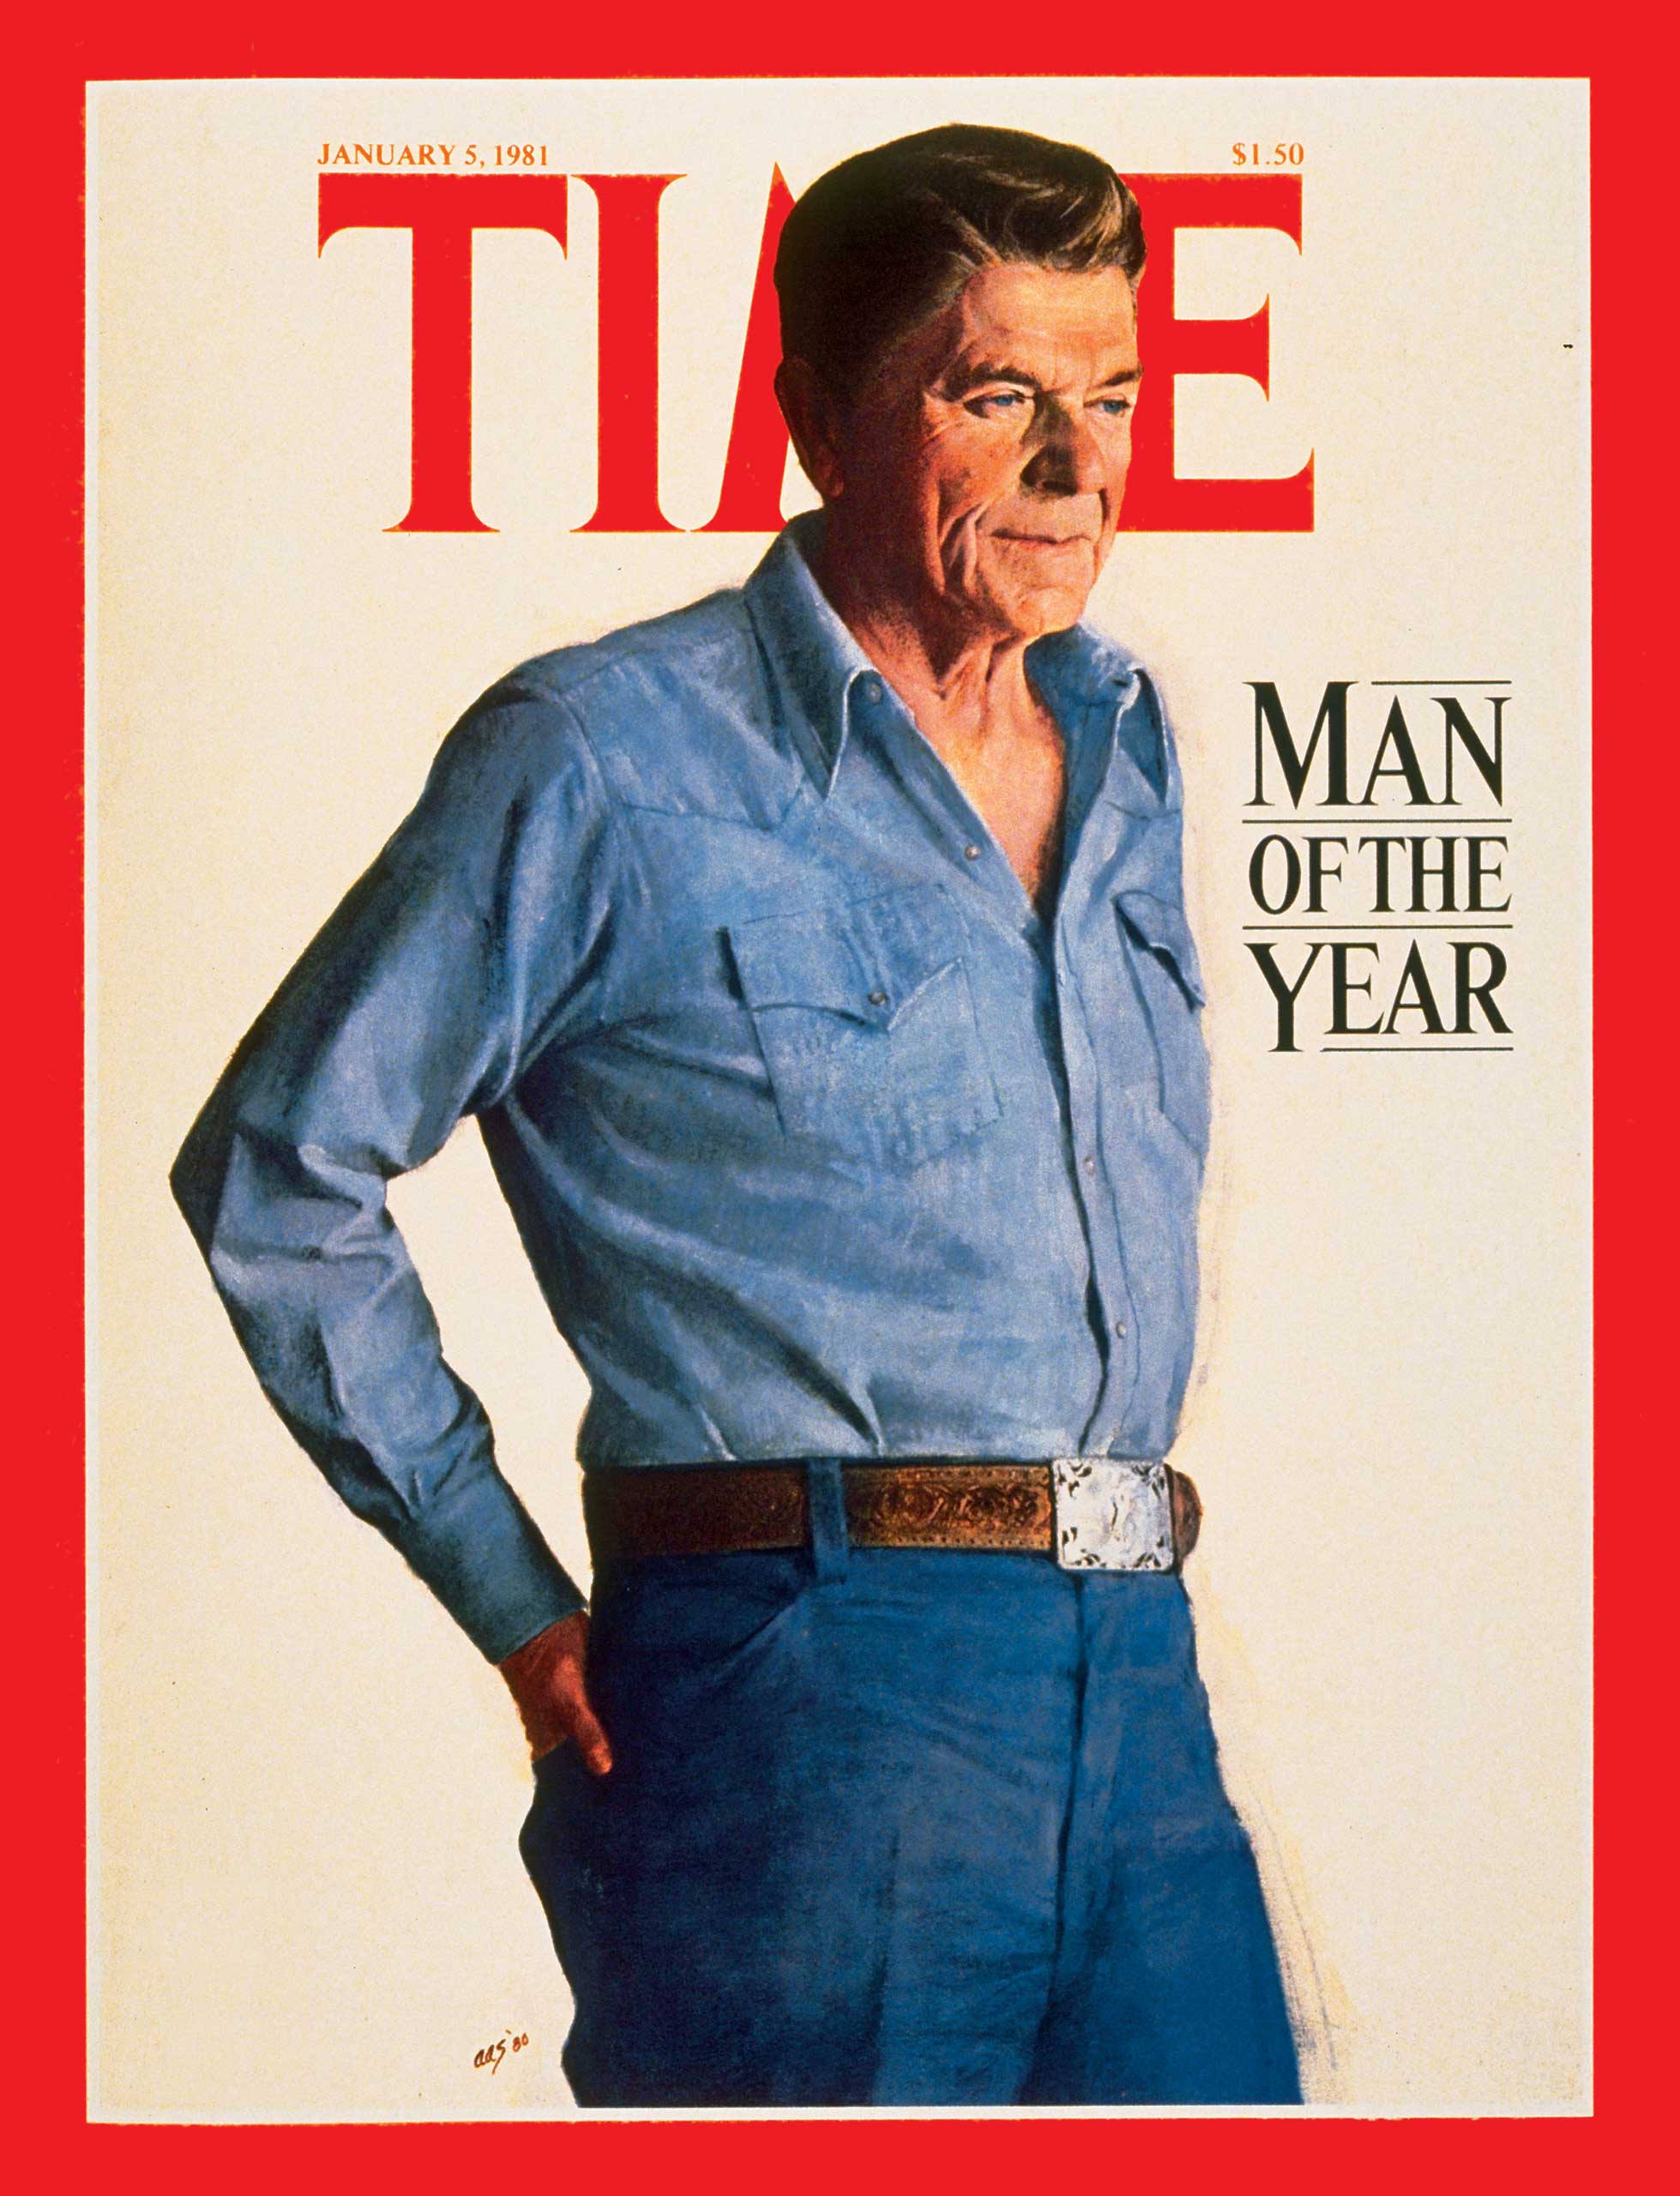 1980: President Ronald Reagan